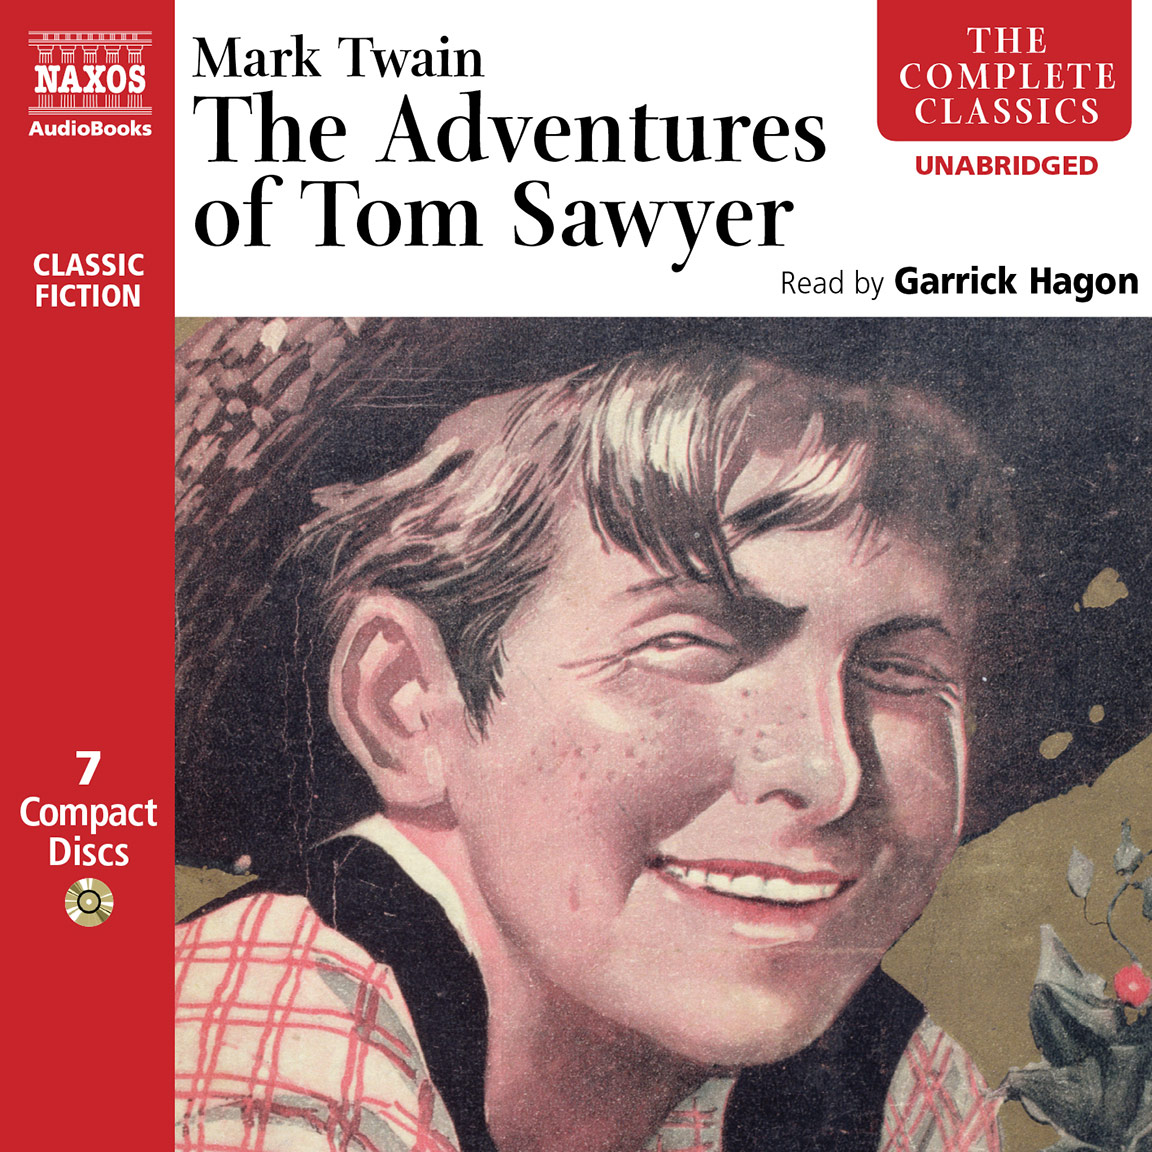 Mark Twain the Adventures of Tom Sawyer. Adventures of Tom Sawyer Audiobook. Tom Sawyer book. The Adventures of Tom Sawyer book Cover. Приключения тома сойера аудио